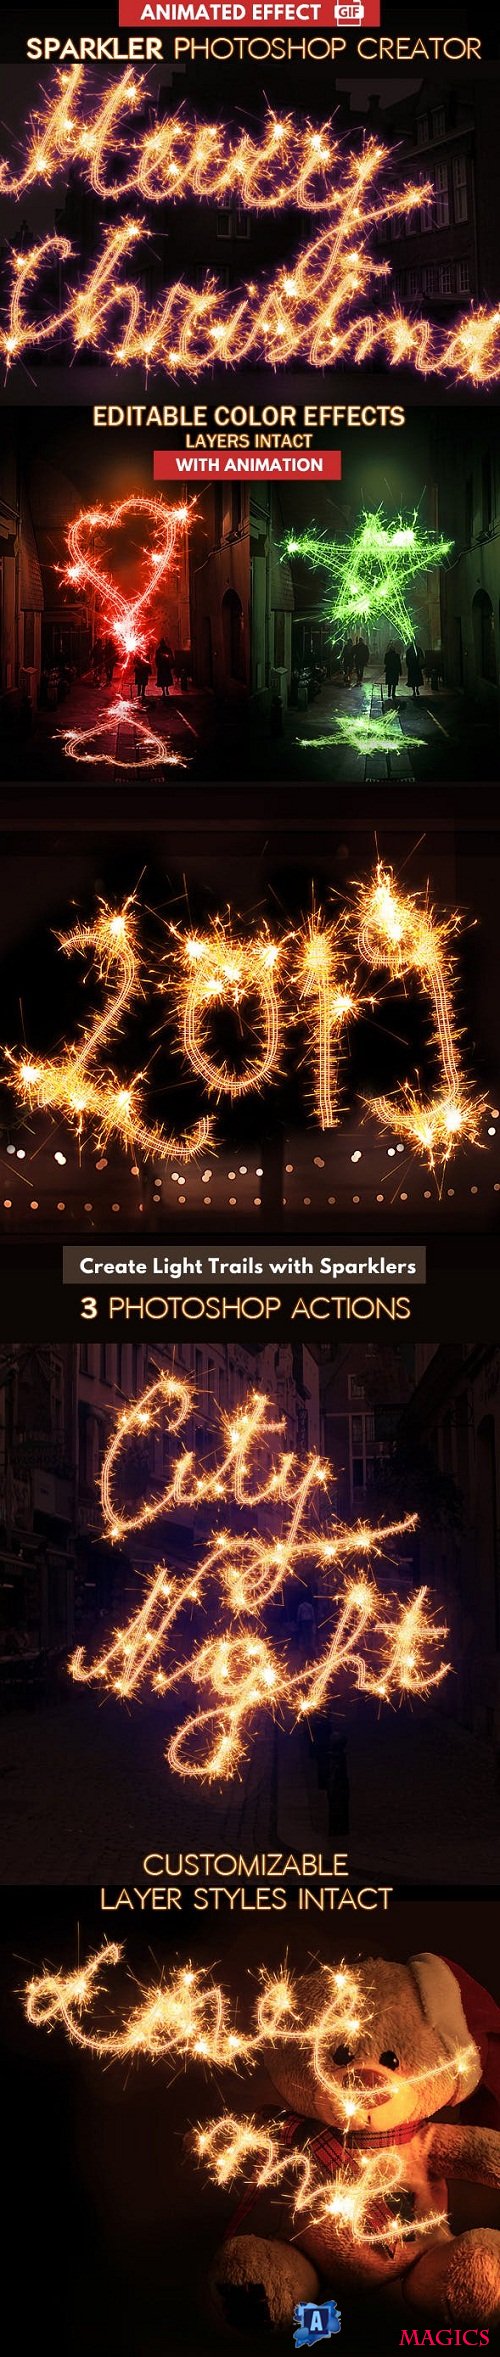 Sparklers Light Trails Photoshop Actions - 9545780